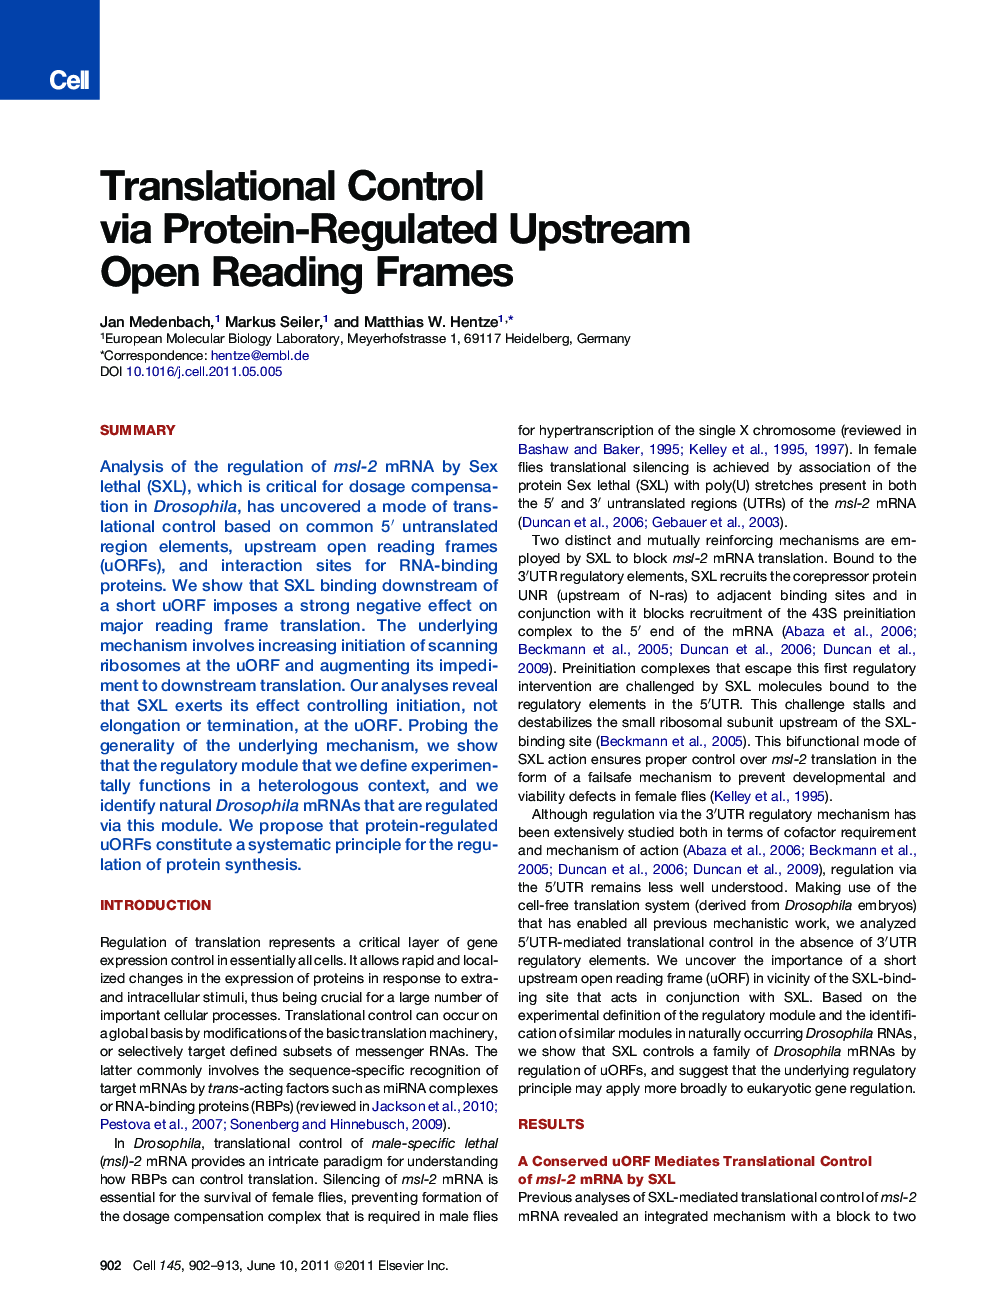 Translational Control via Protein-Regulated Upstream Open Reading Frames